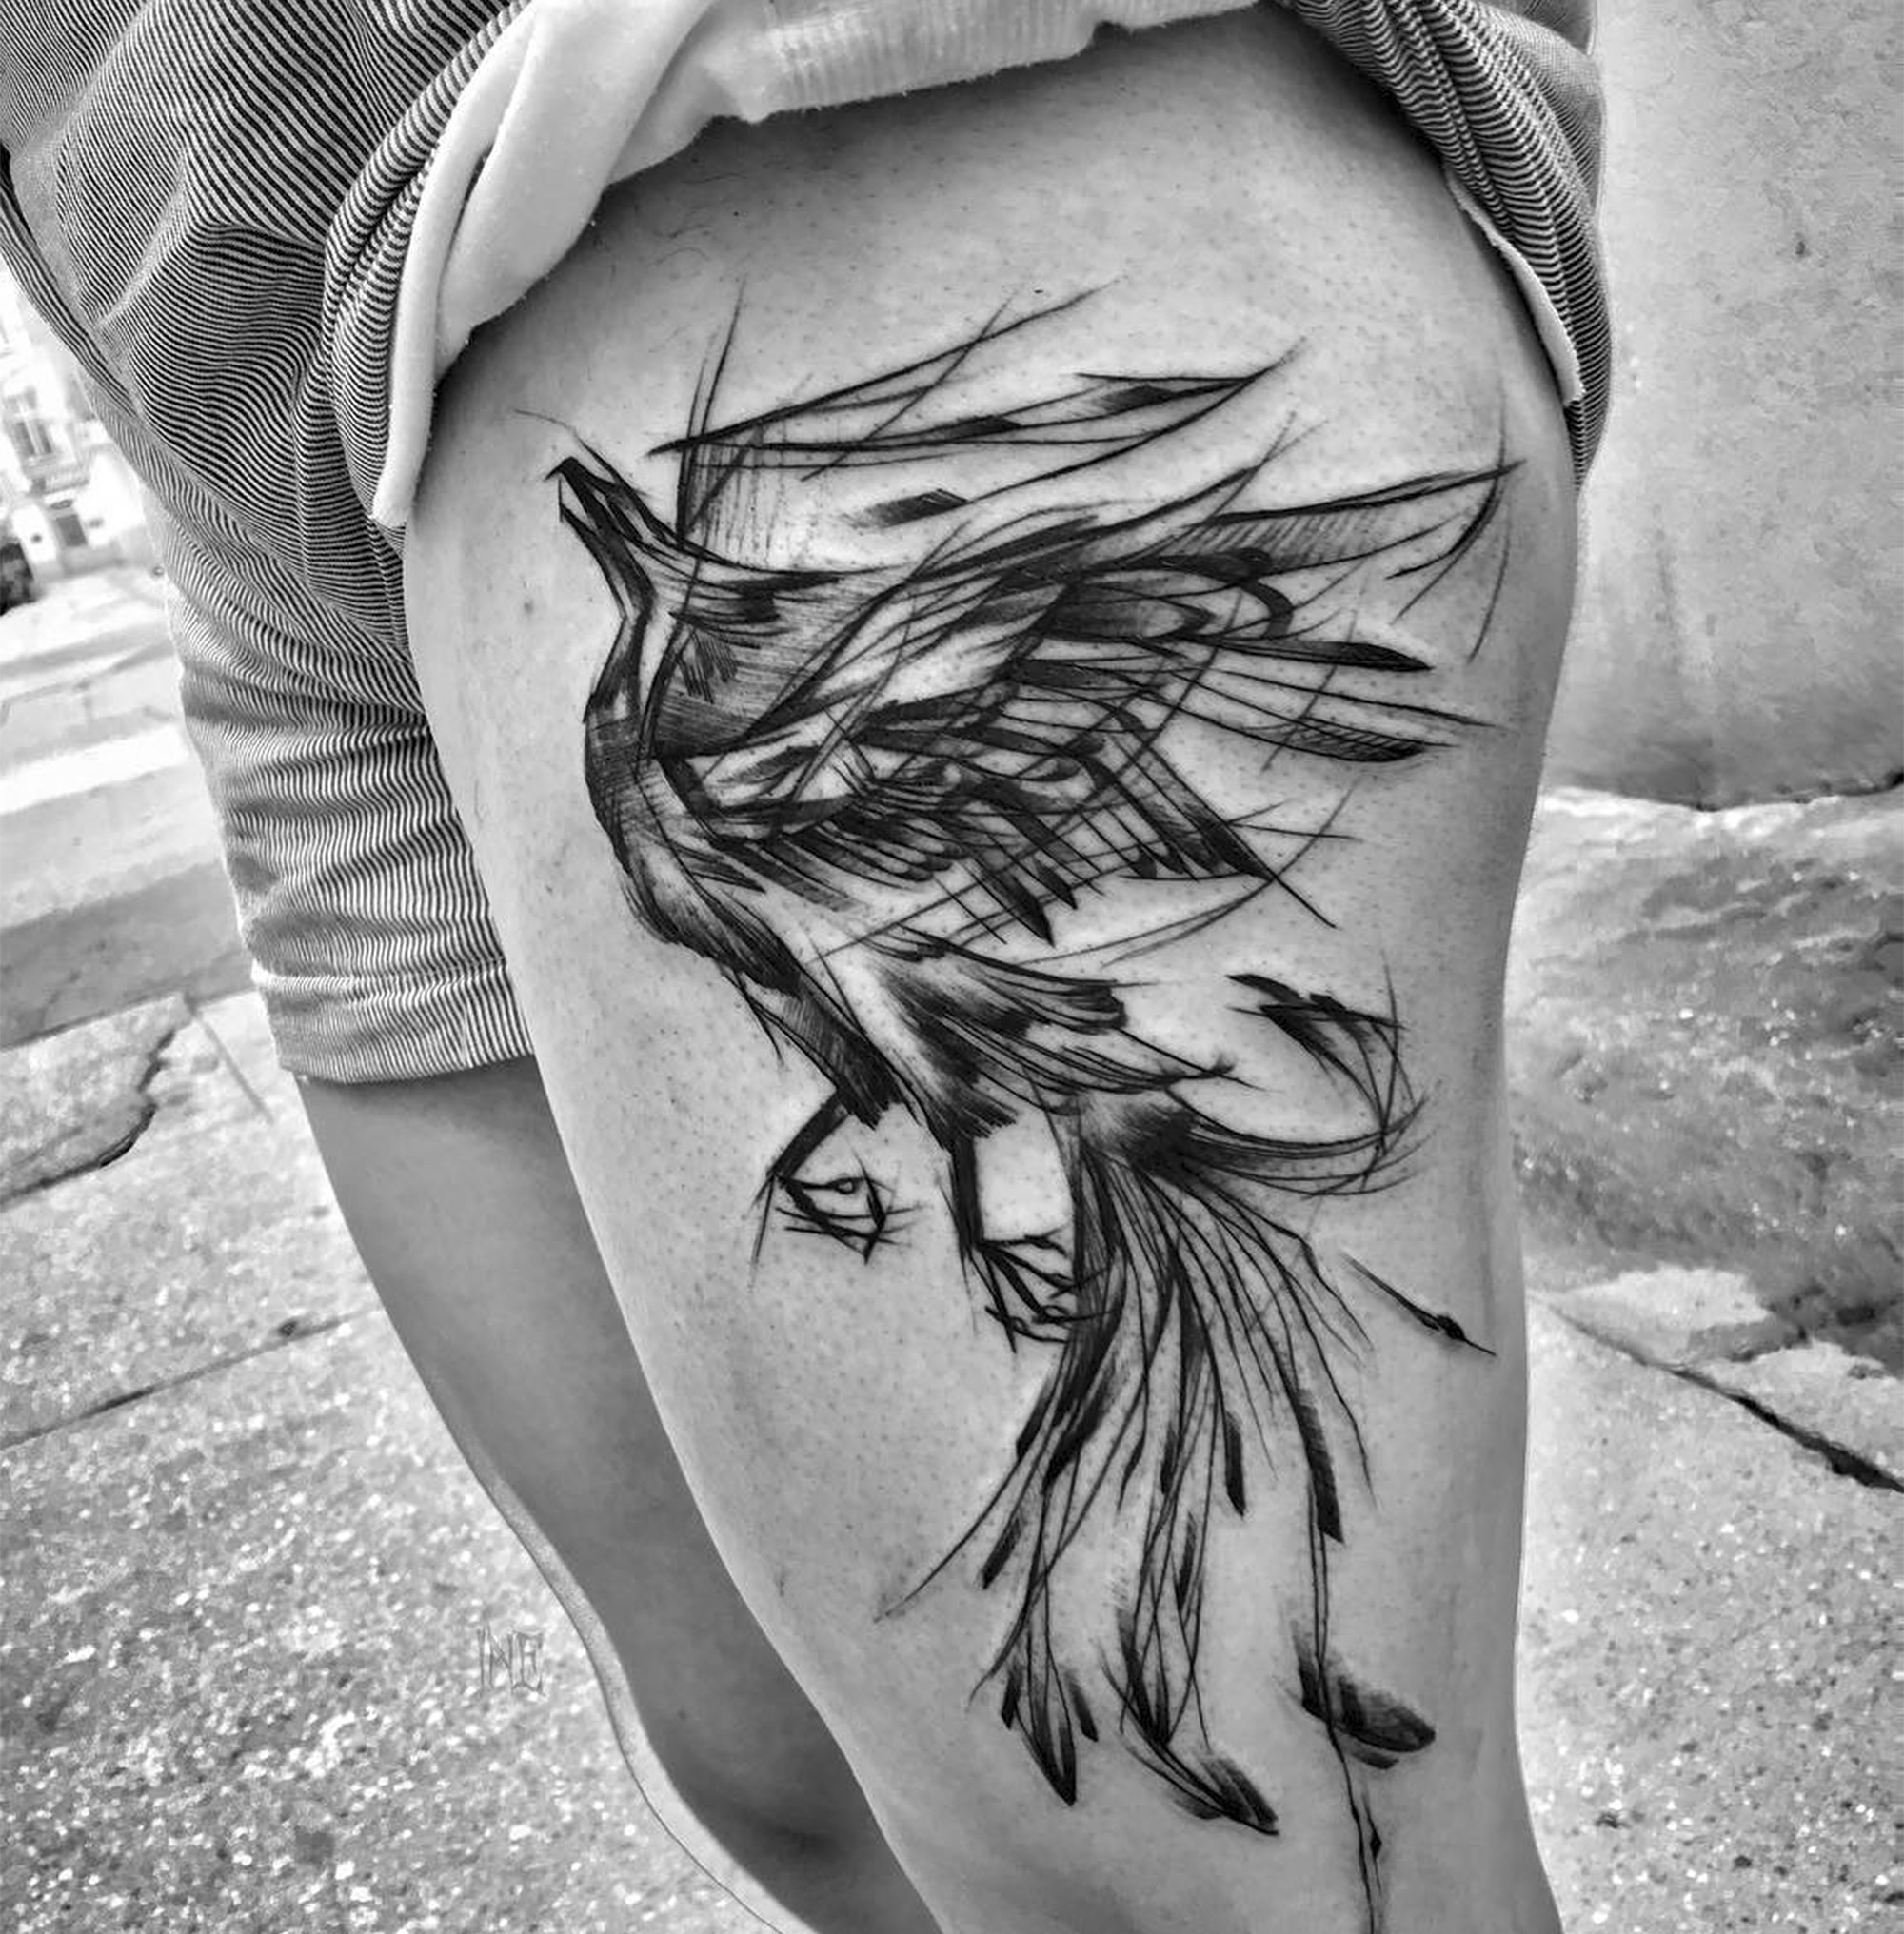 expressive bird tattooed on thigh